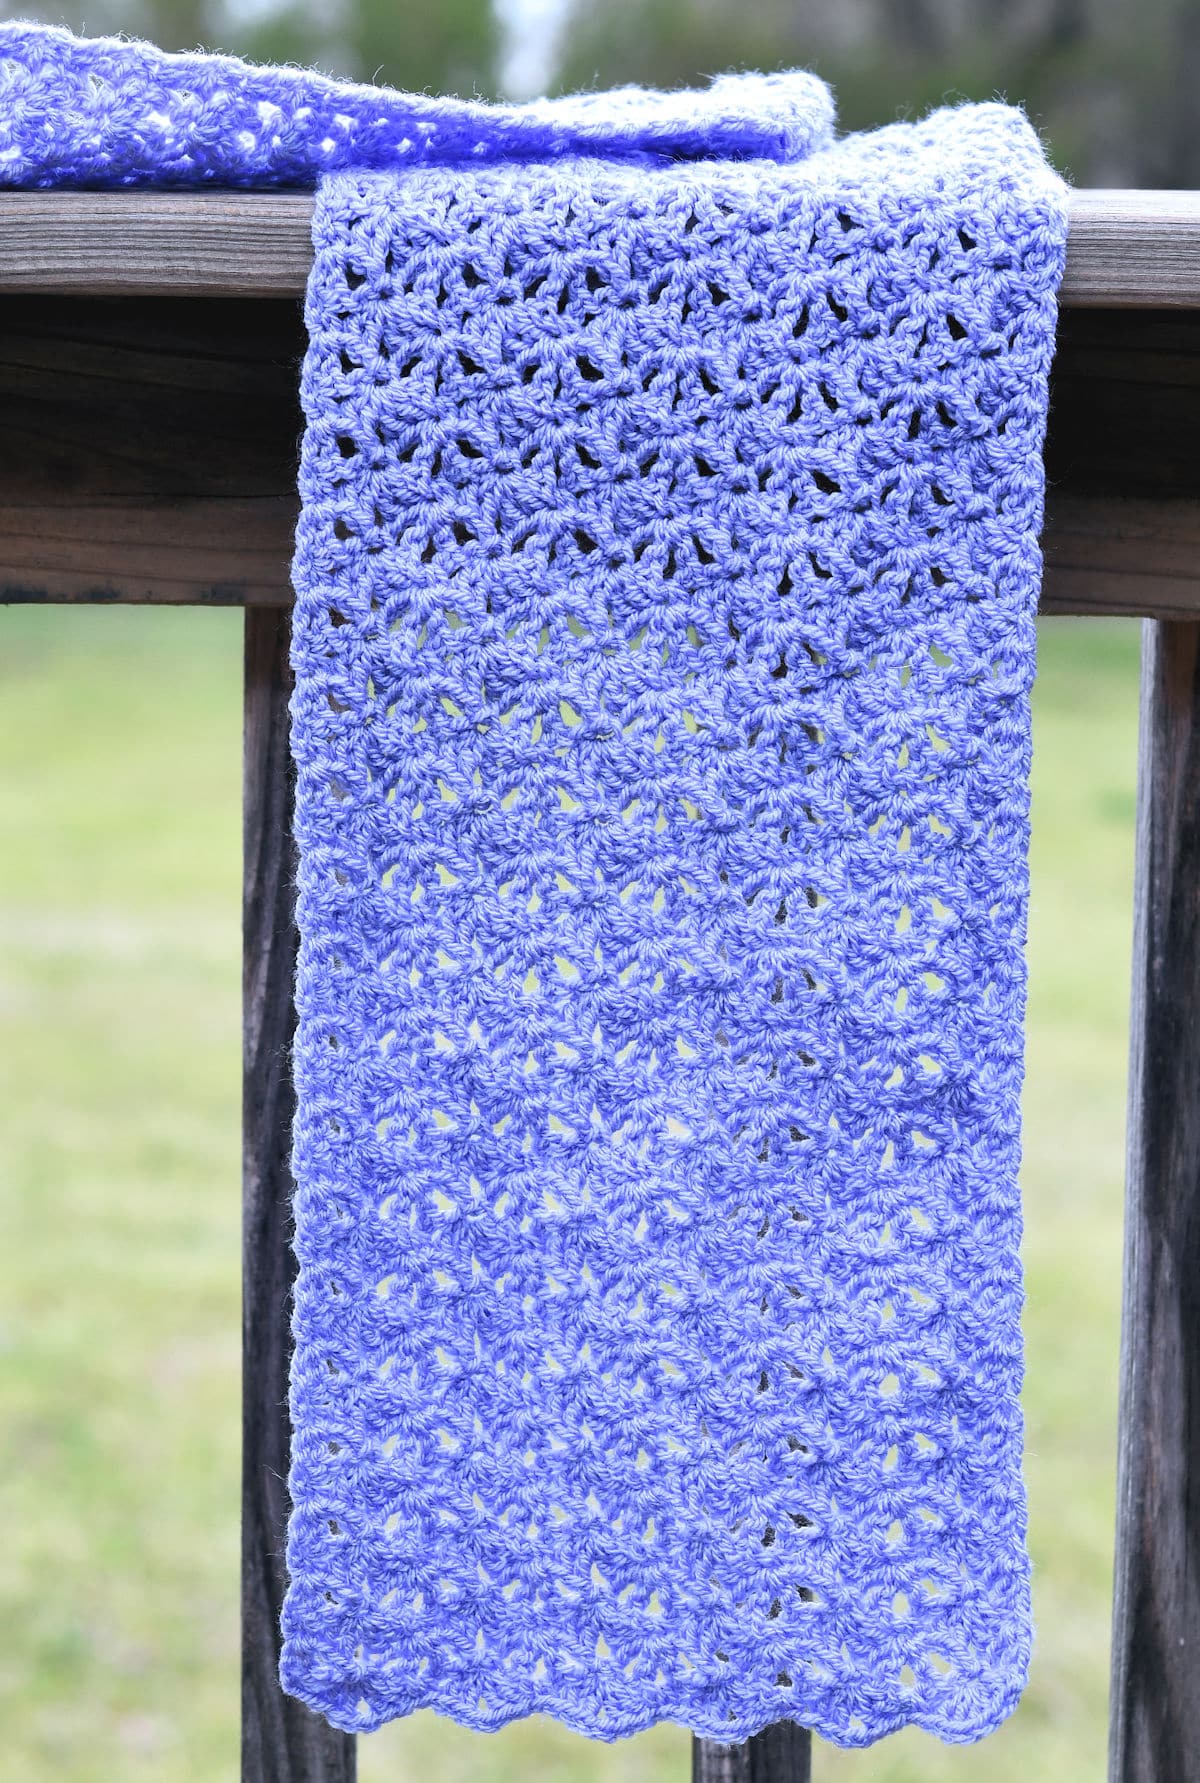 Free Lacy Crochet Scarf Pattern by Kim Guzman at Make It Crochet